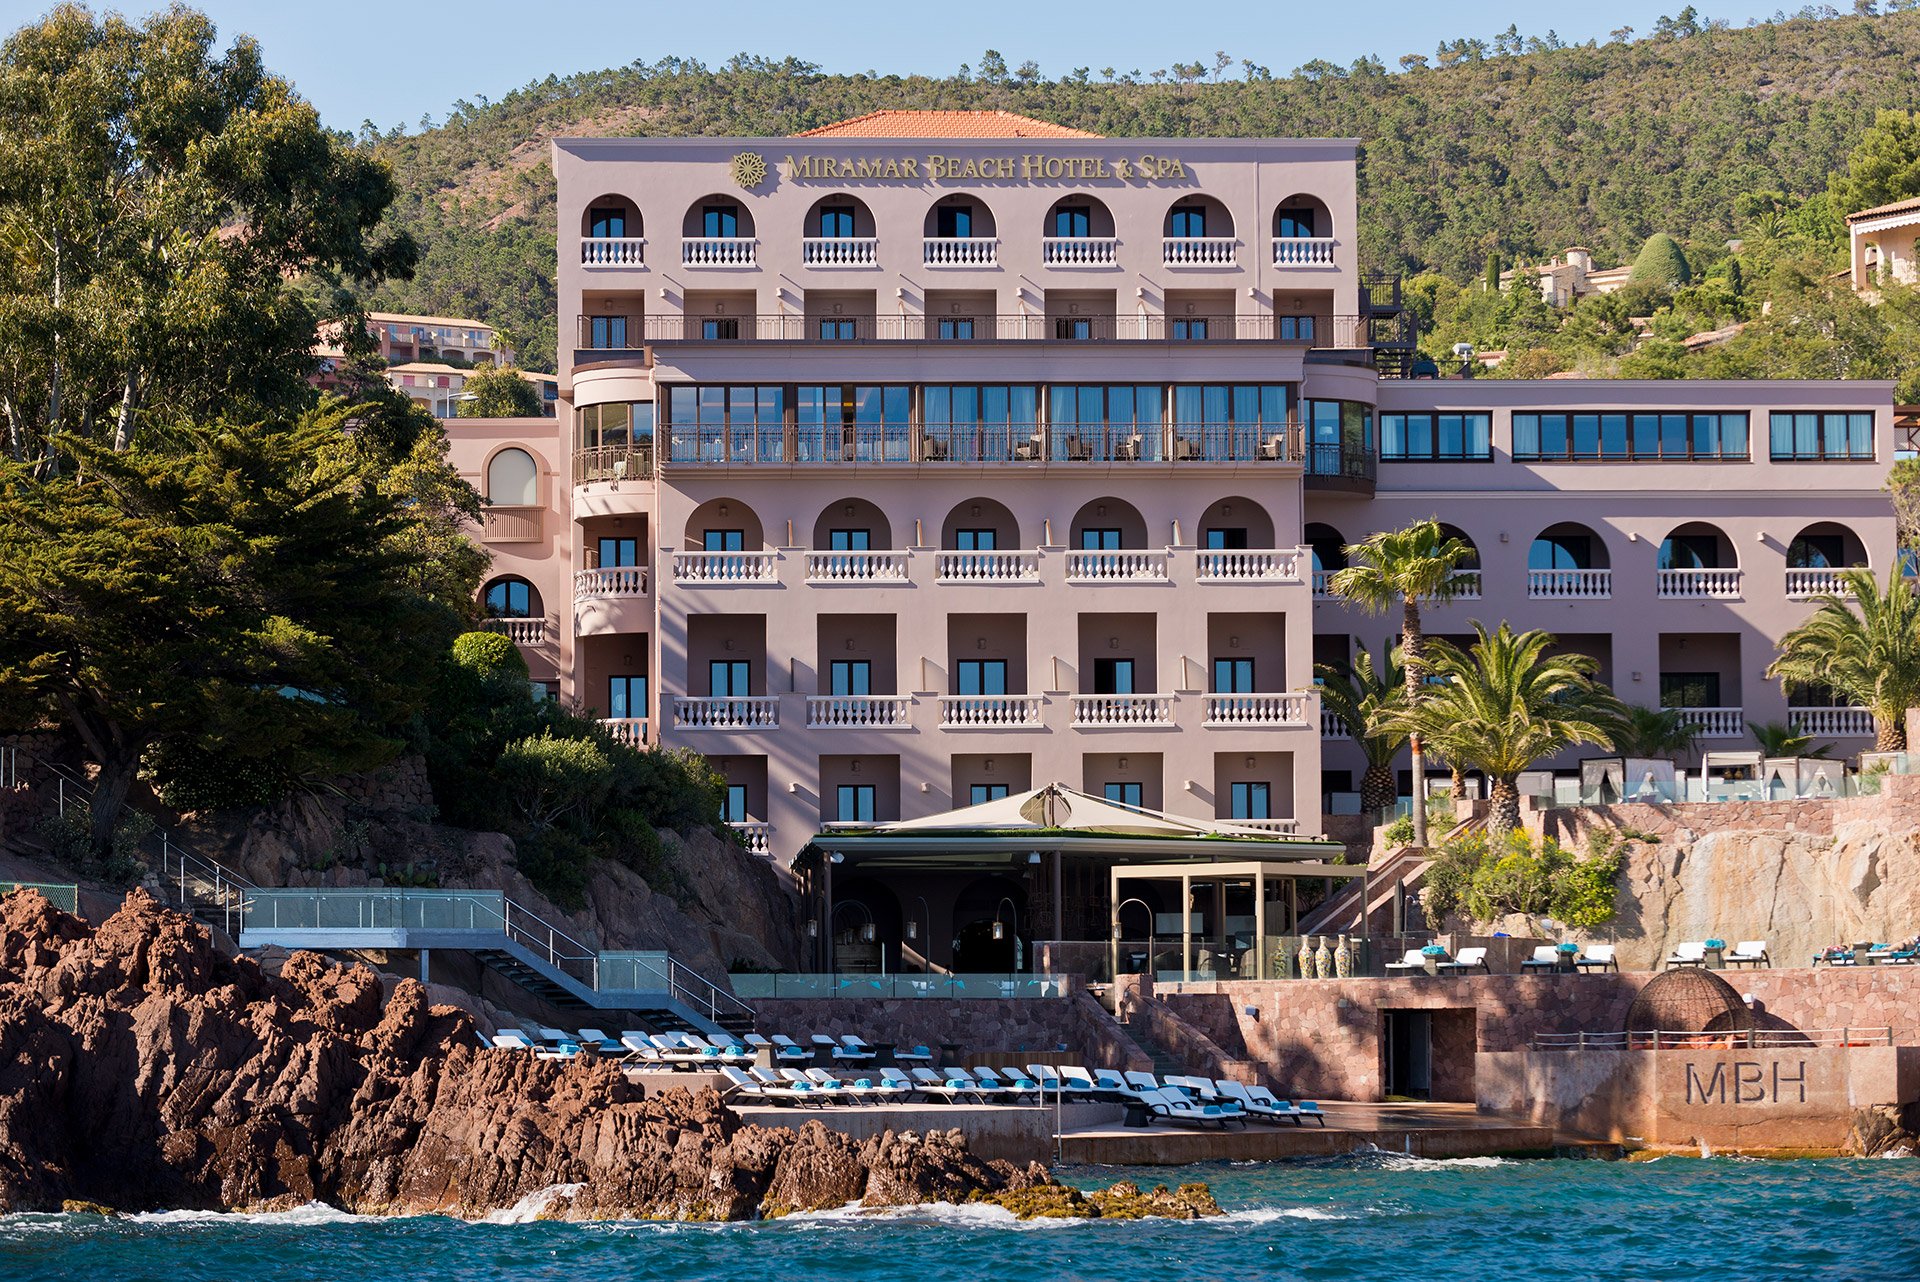 Miramar Beach hôtel & SPA | Hôtel 5 étoiles Resort Côte d'Azur